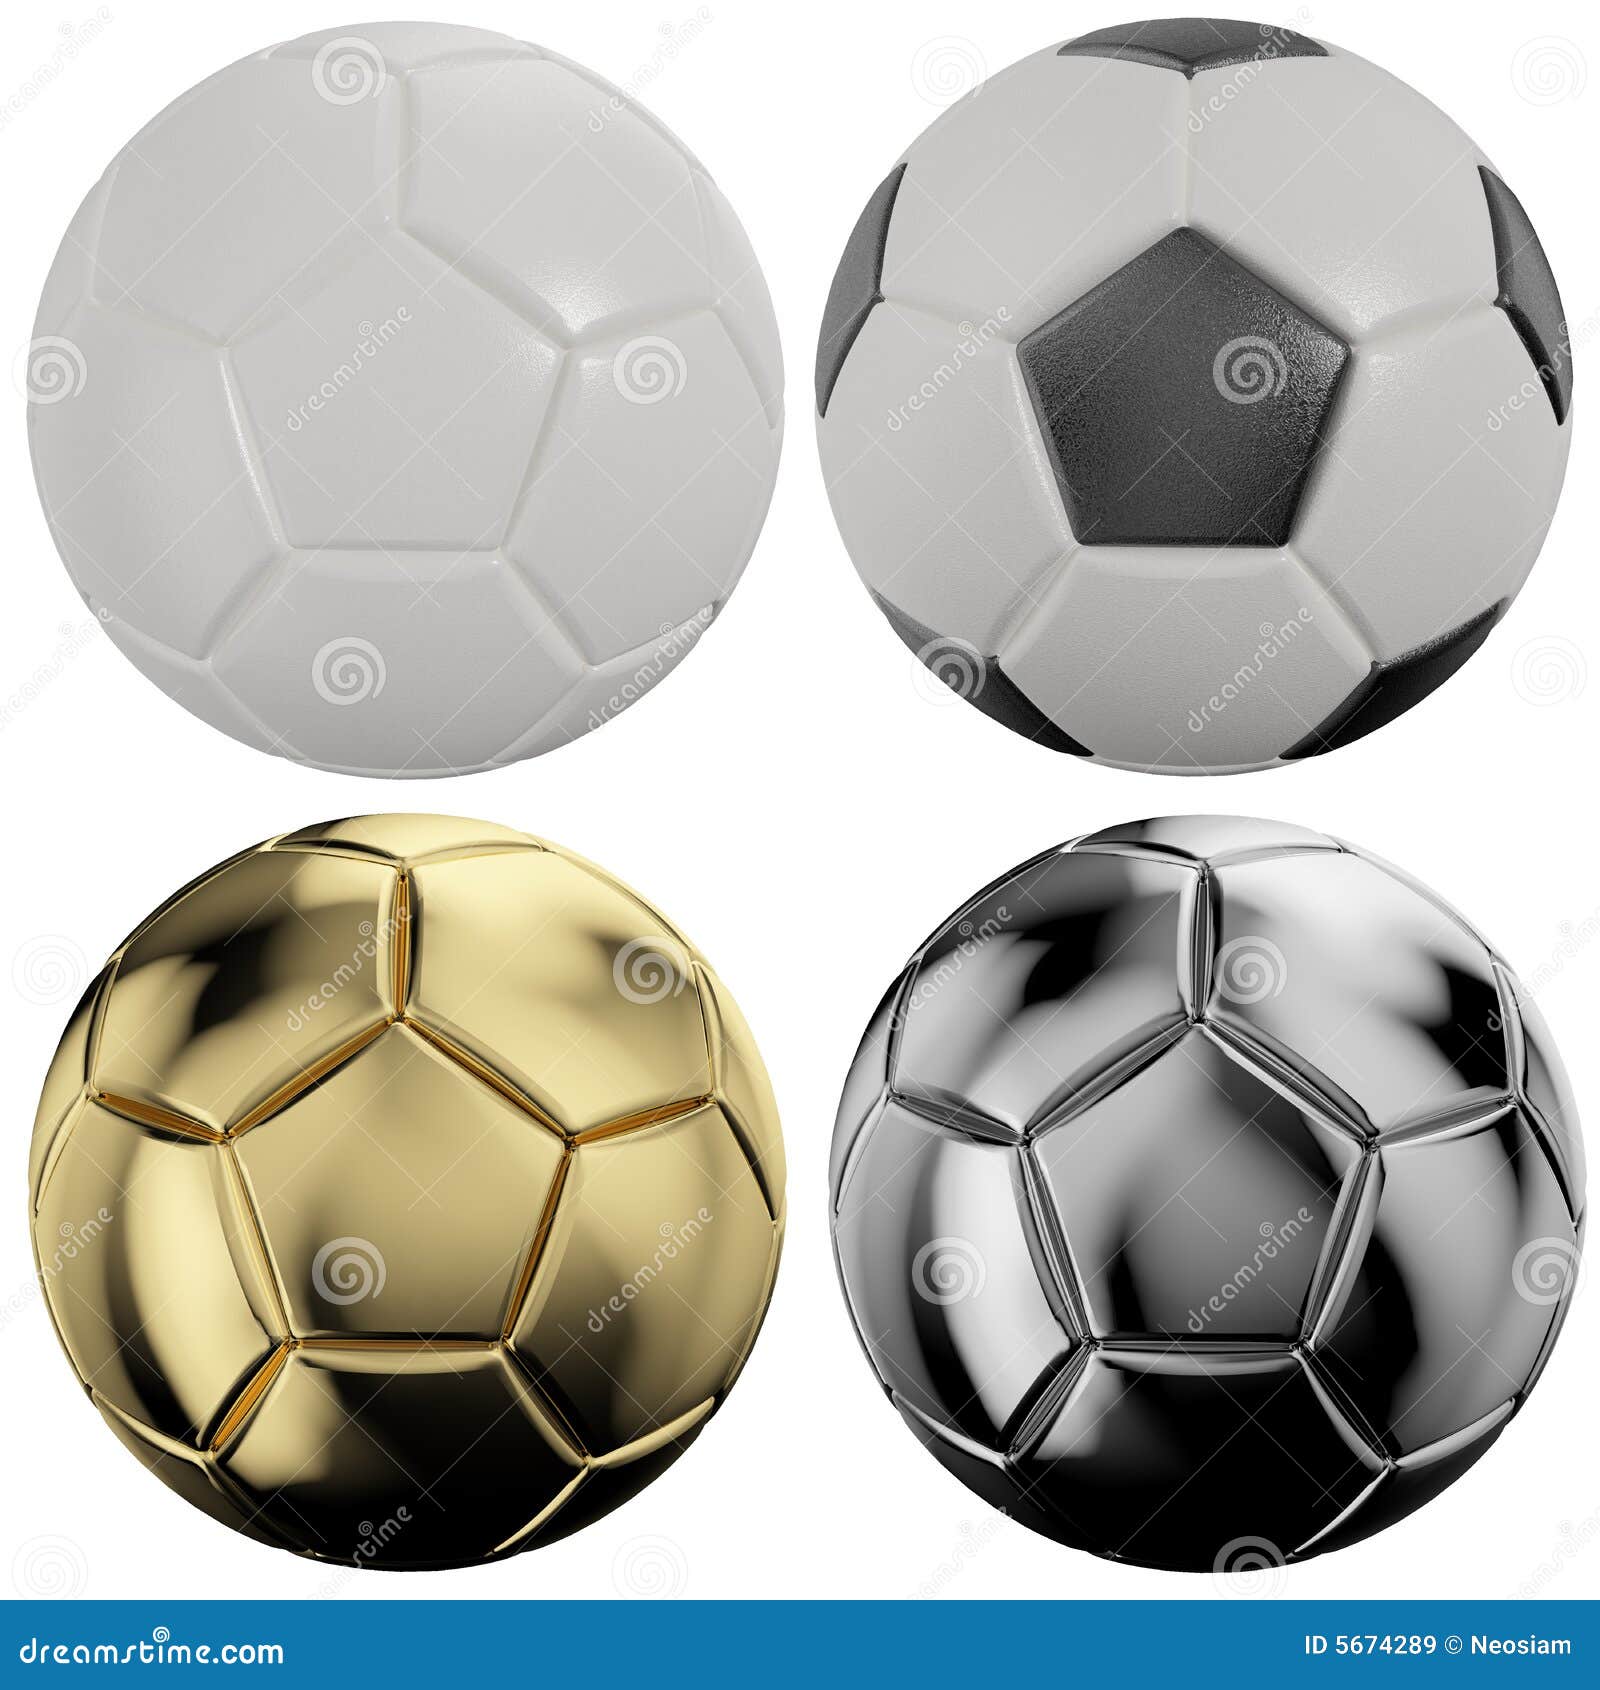 nice soccer balls